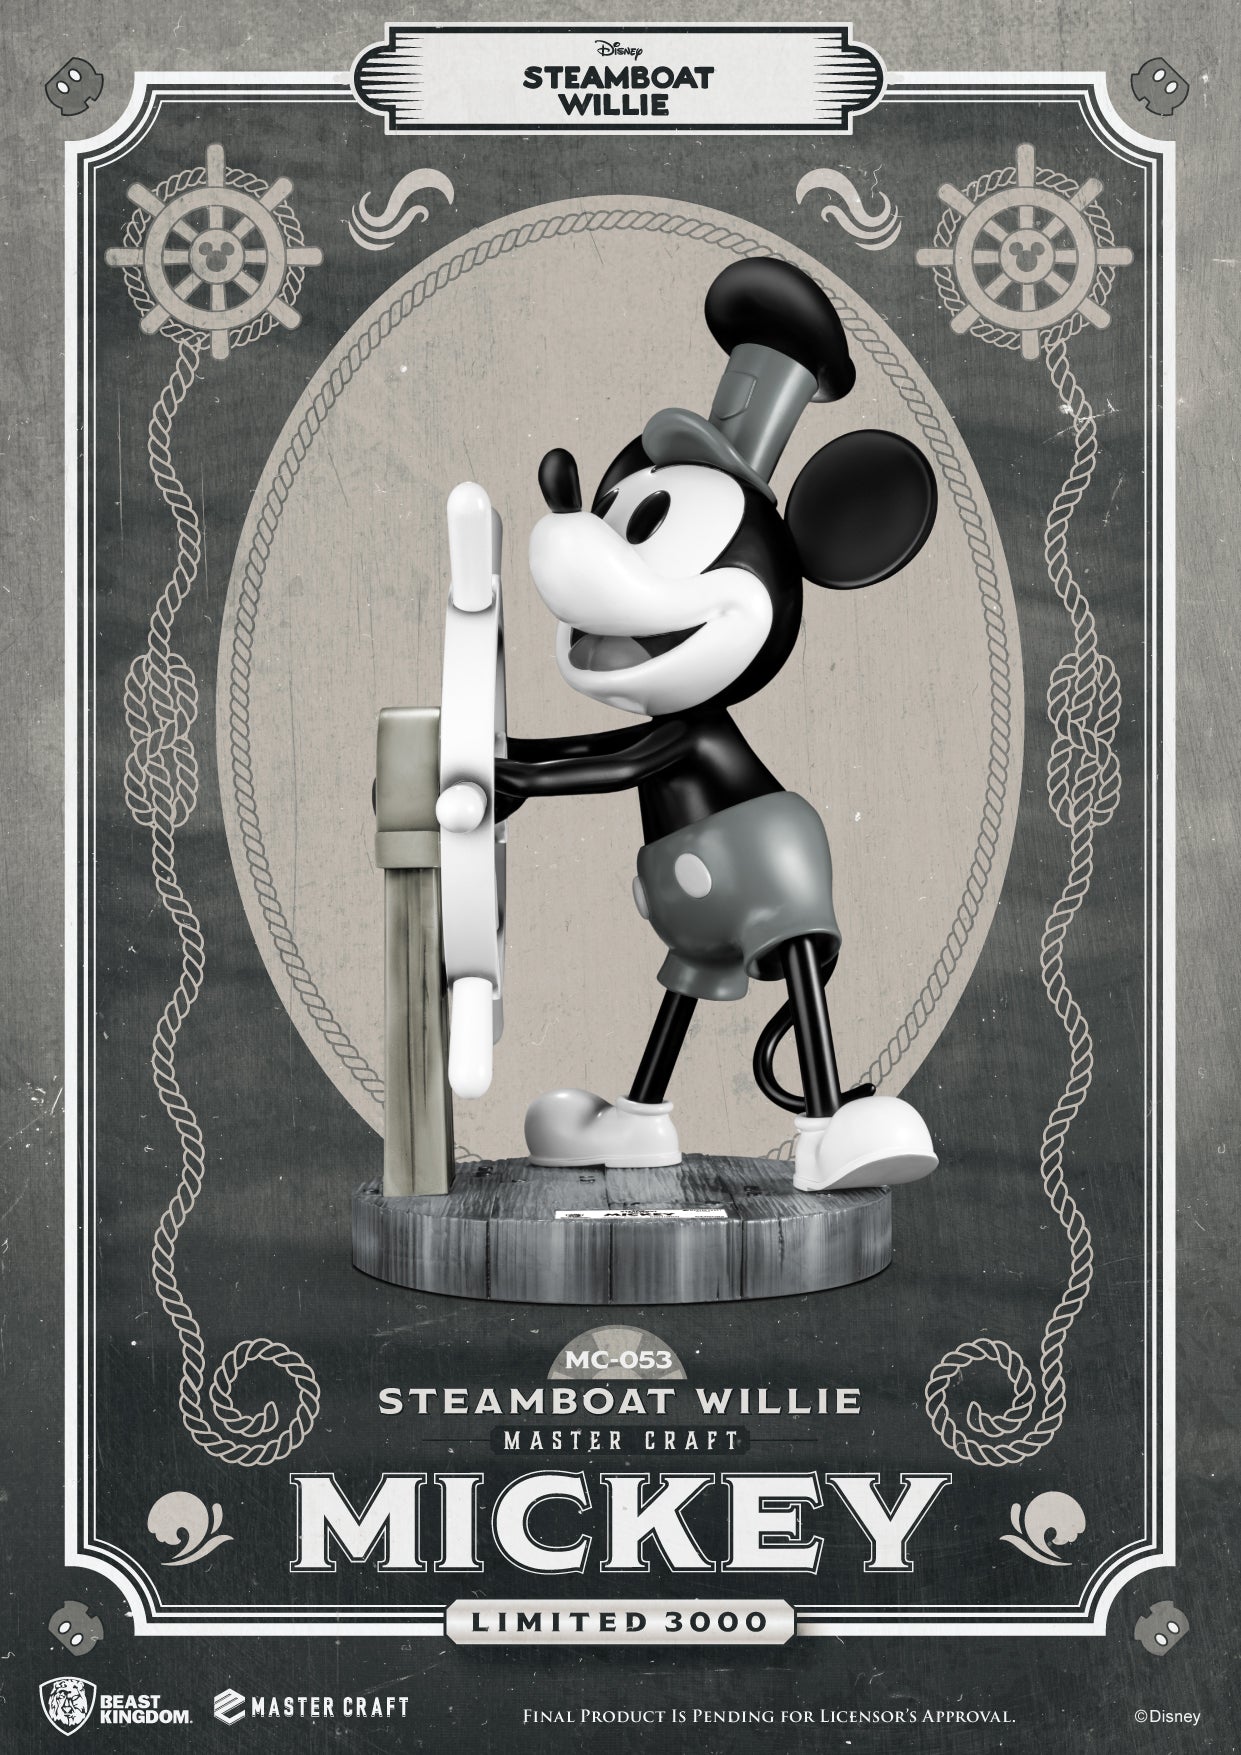 Steamboat Willie Master Craft Mickey (Master Craft)